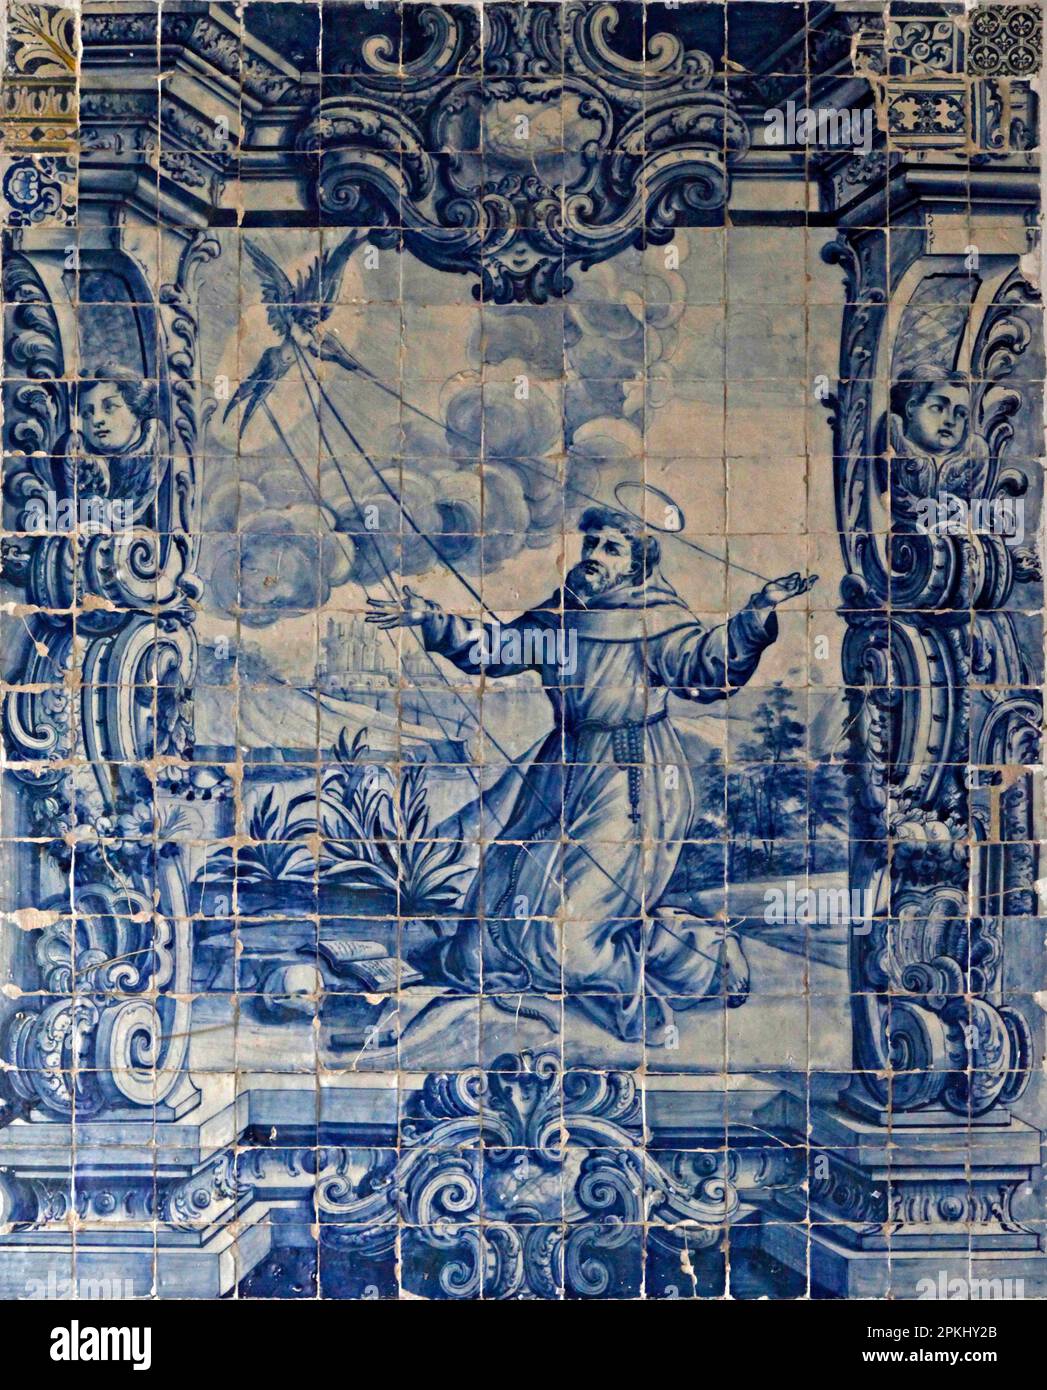 Tile painting, Azulejo in the Convento de Santa Clara, Funchal, Madeira, Portugal Stock Photo